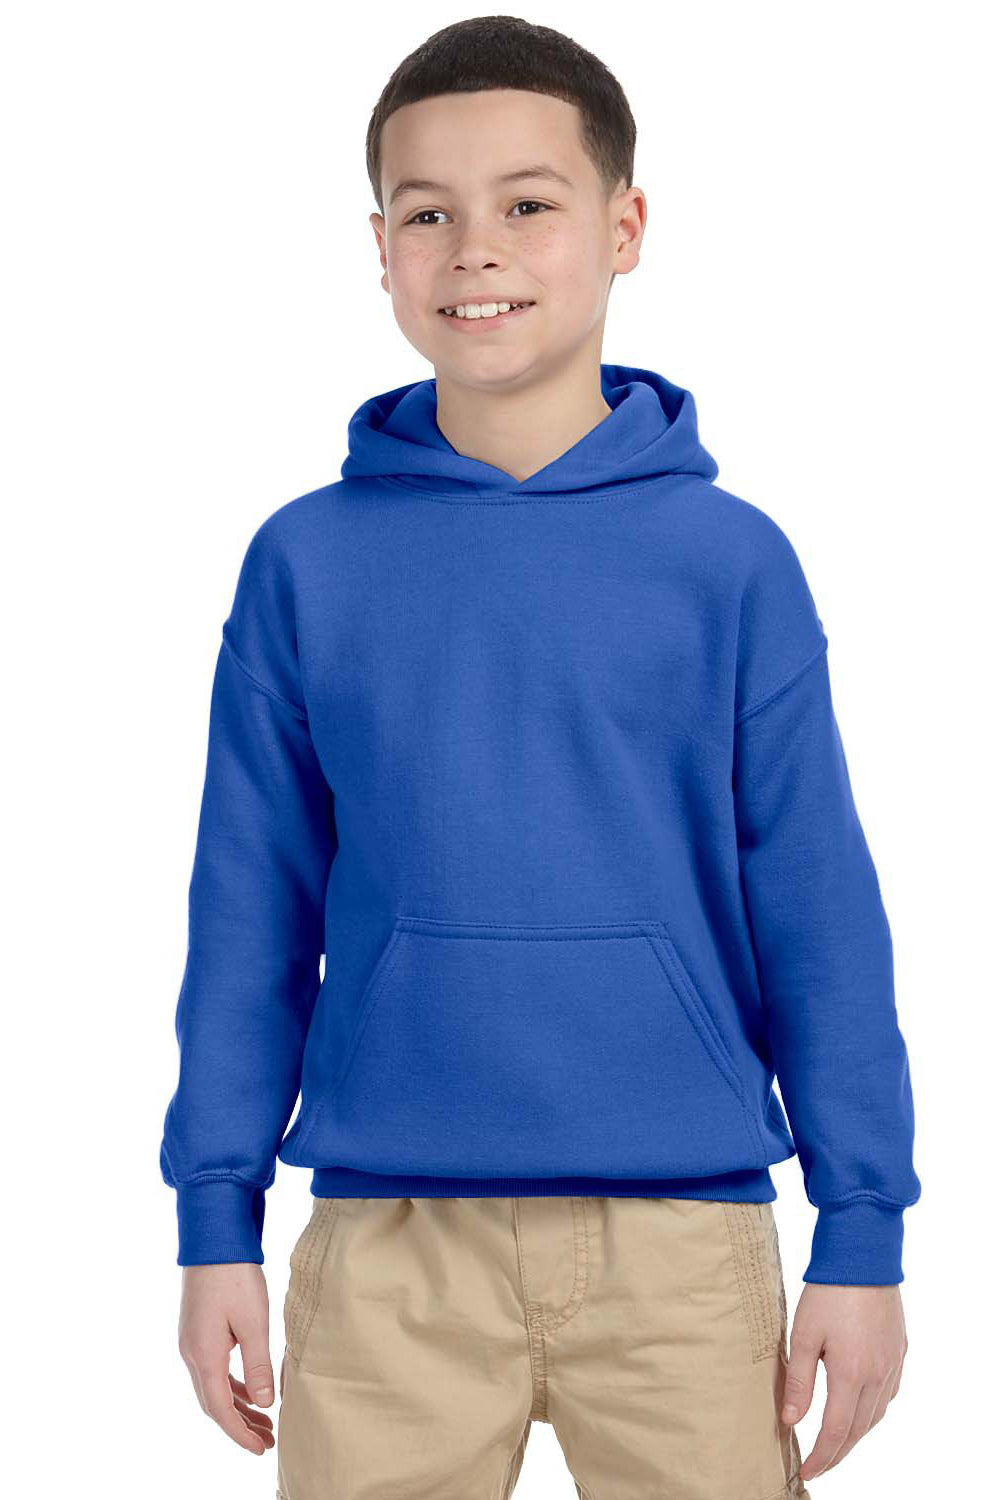 Gildan G185B Youth Hooded Sweatshirt Hoodie Royal Blue Front